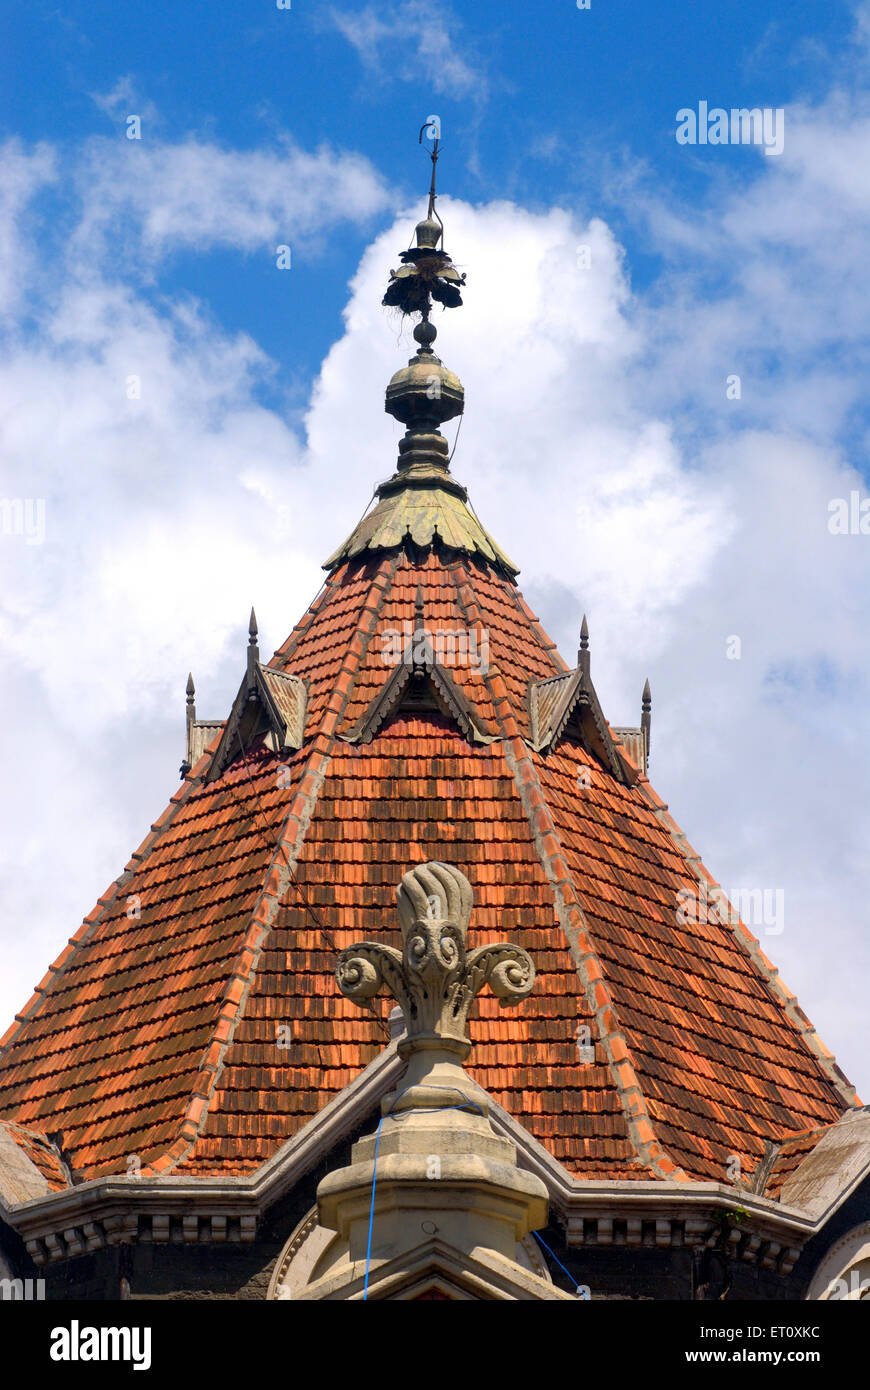 Octagonal top with mangalore tiled roof of mahatma jyotiba phule market ; Pune ; Maharashtra ; India ; Asia Stock Photo